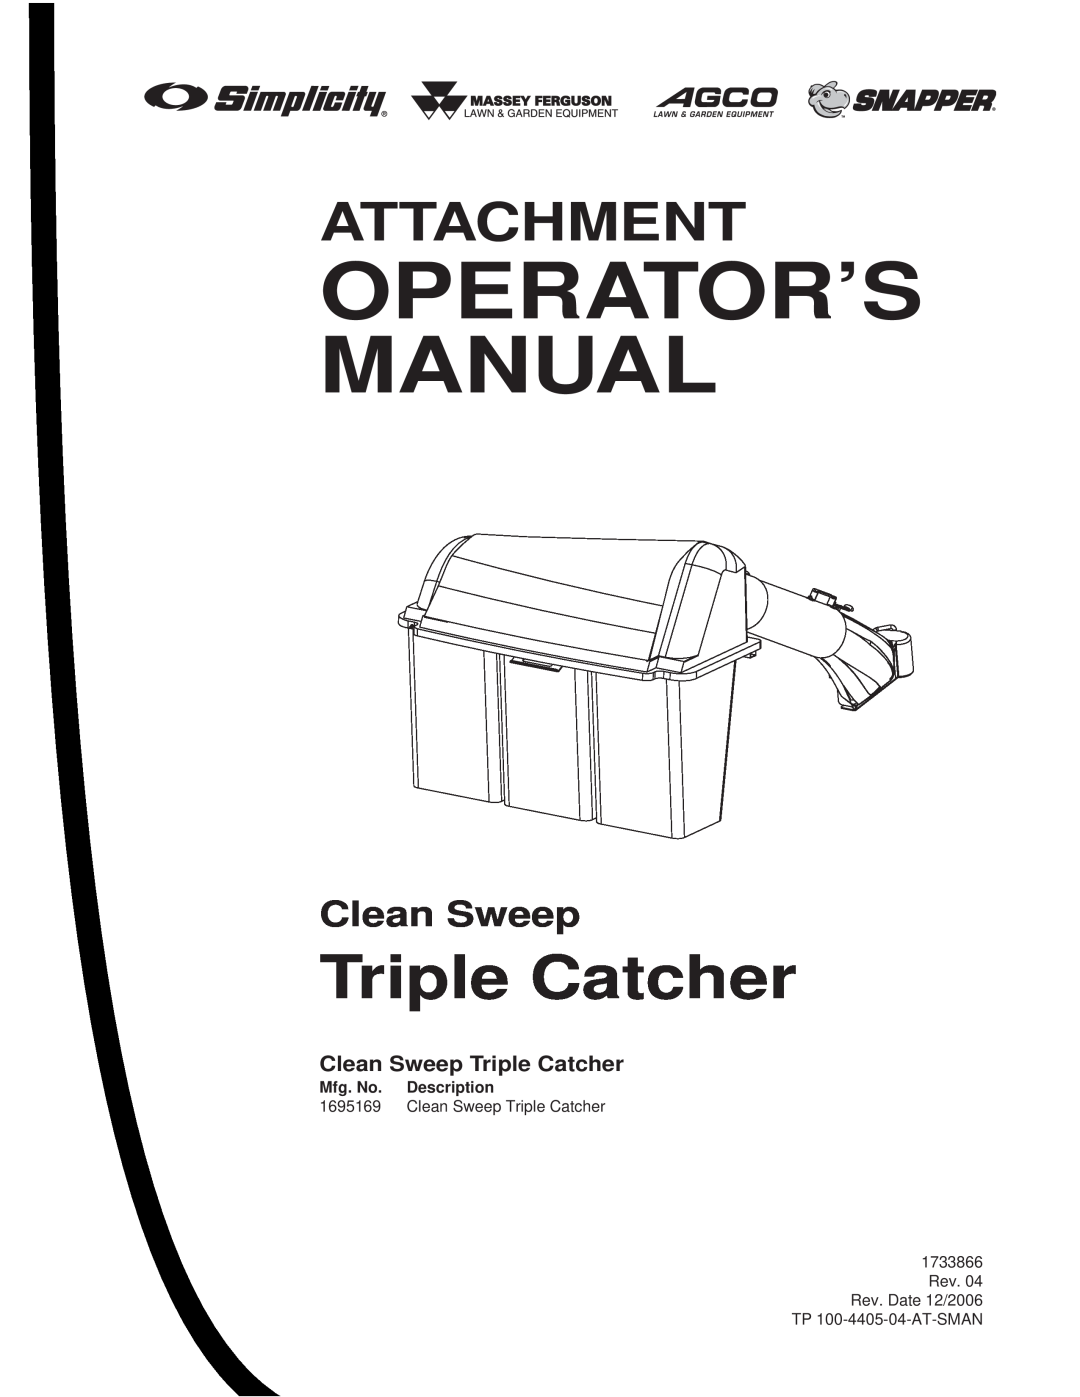 Snapper 1733866, 1695169 manual Clean Sweep Triple Catcher, Operator’S Manual, Attachment, Mfg. No. Description 